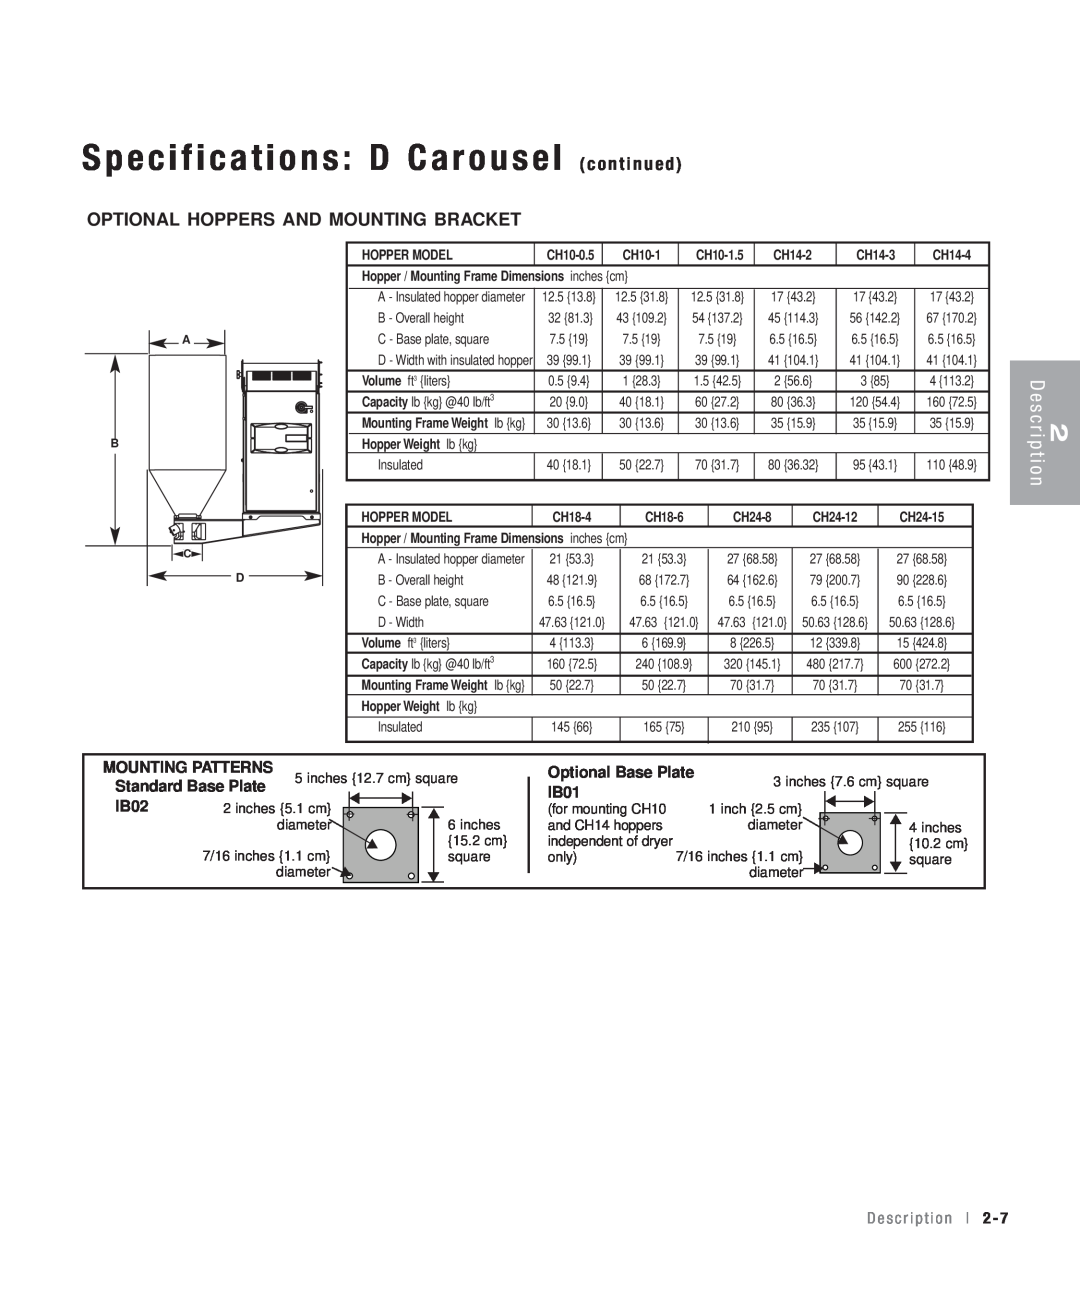 Conair 15 Specifications: D Carousel c o n t i n u e d, D e s c r i p t i o n, Optional Hoppers And Mounting Bracket, IB01 